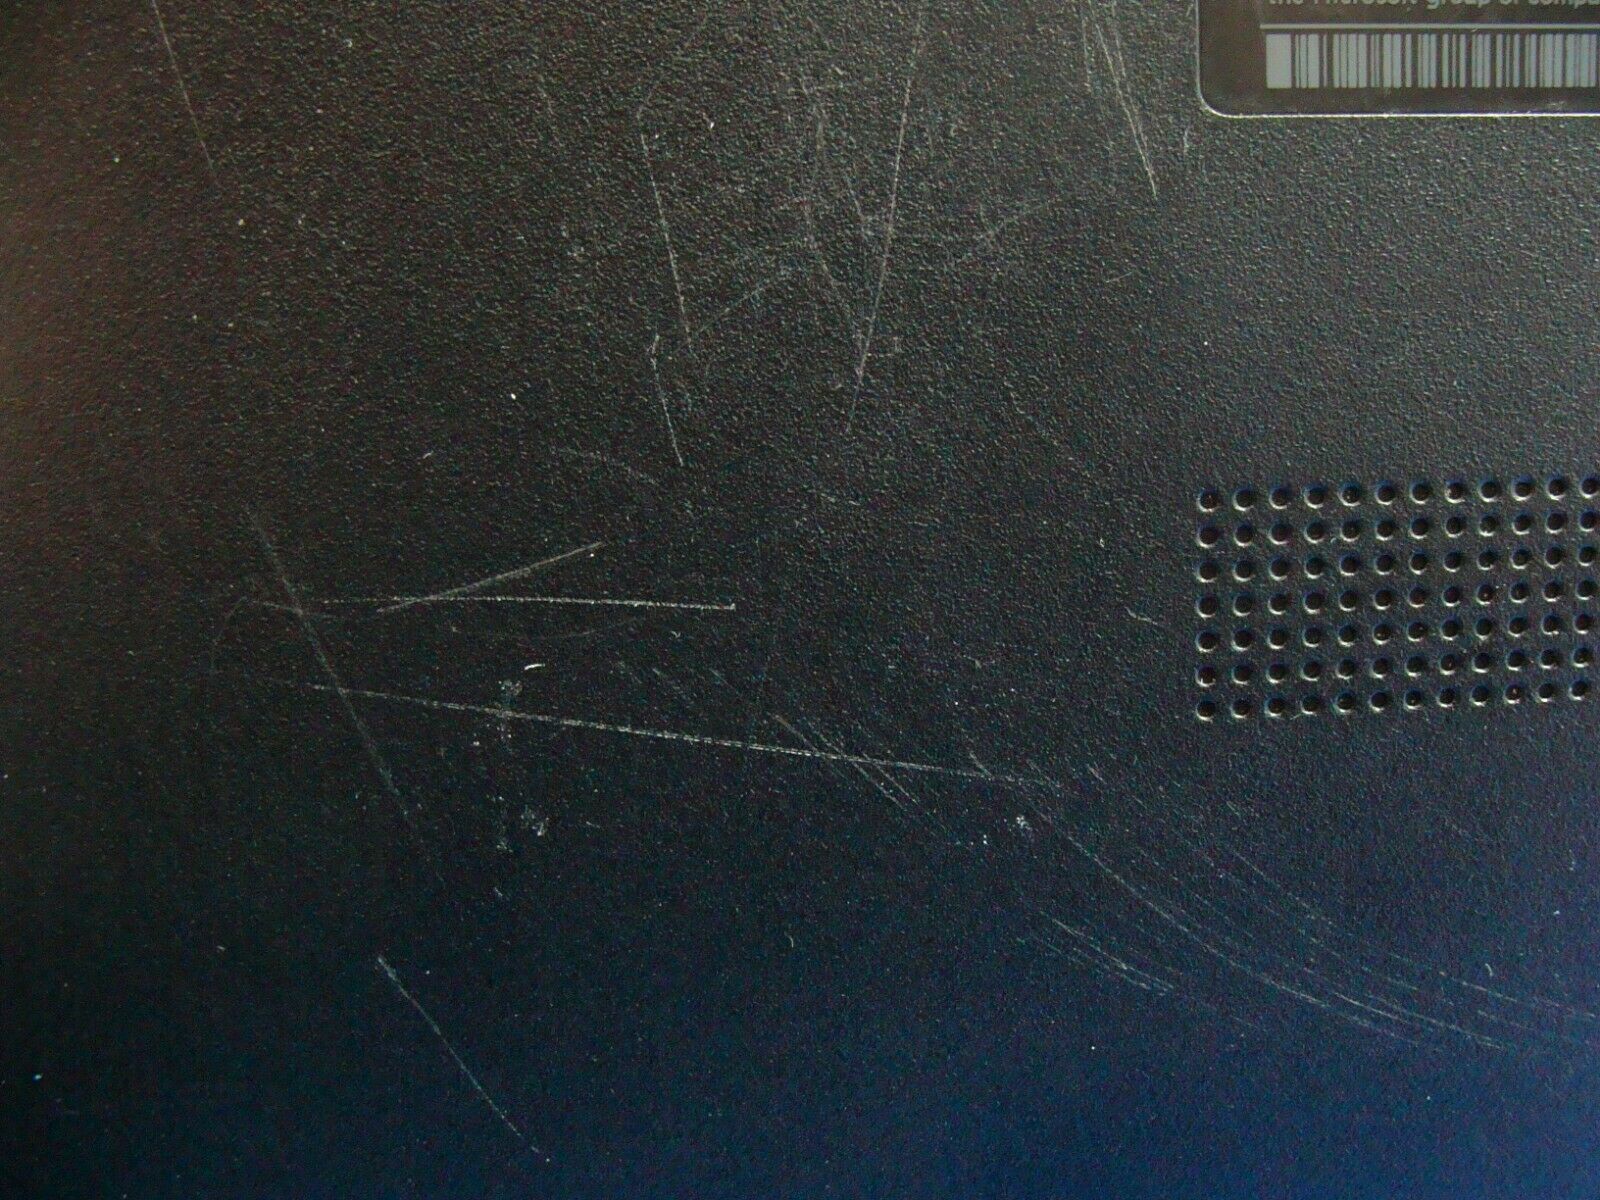 HP Notebook 15-f272wm 15.6